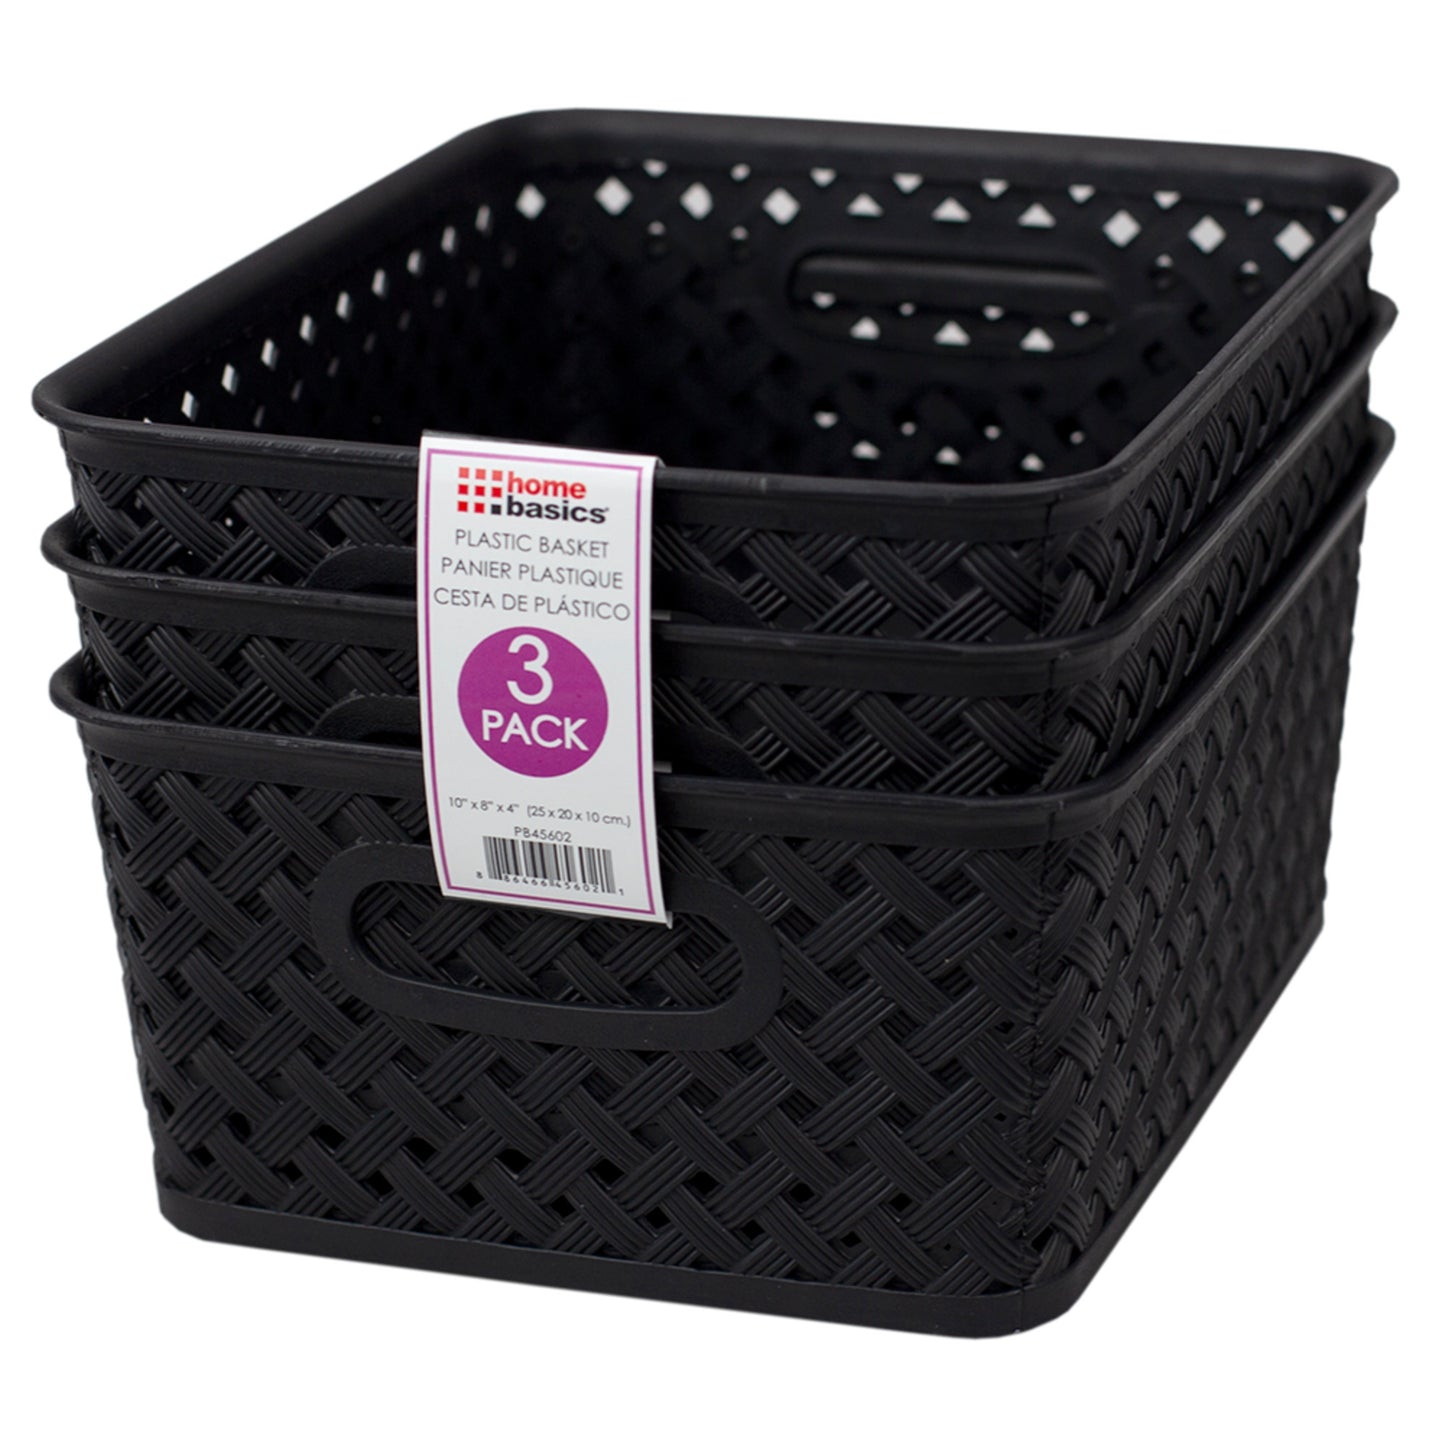 Home Basics Triple Woven 10" x 7.75" x 4" Multi-Purpose Stackable Plastic Storage Basket, (Pack of 3), Black - Black